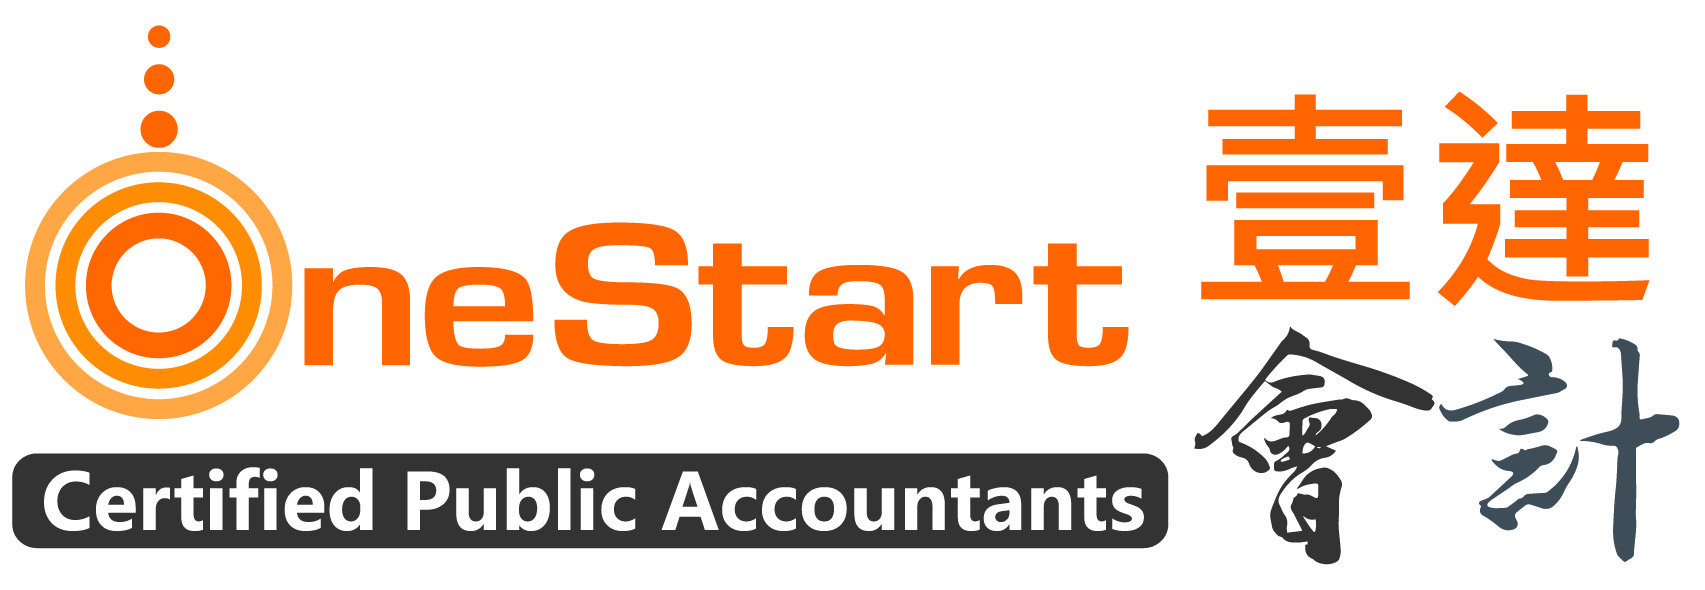 壹達會計 OneStart Certified Public Accountants